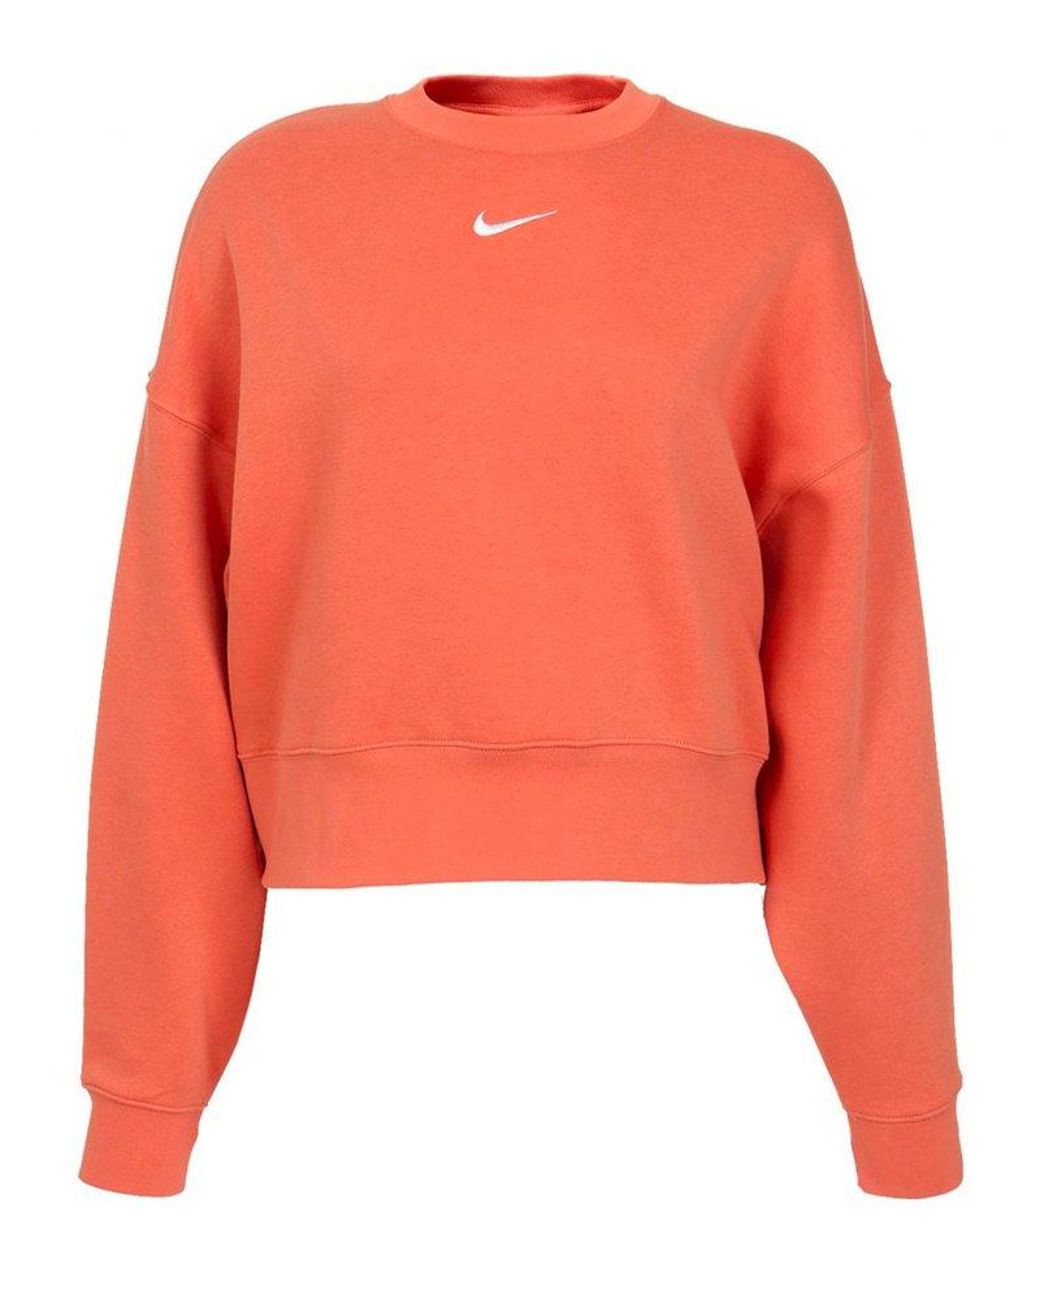 Nike Swoosh Logo Embroidered Crewneck Sweatshirt in Orange | Lyst